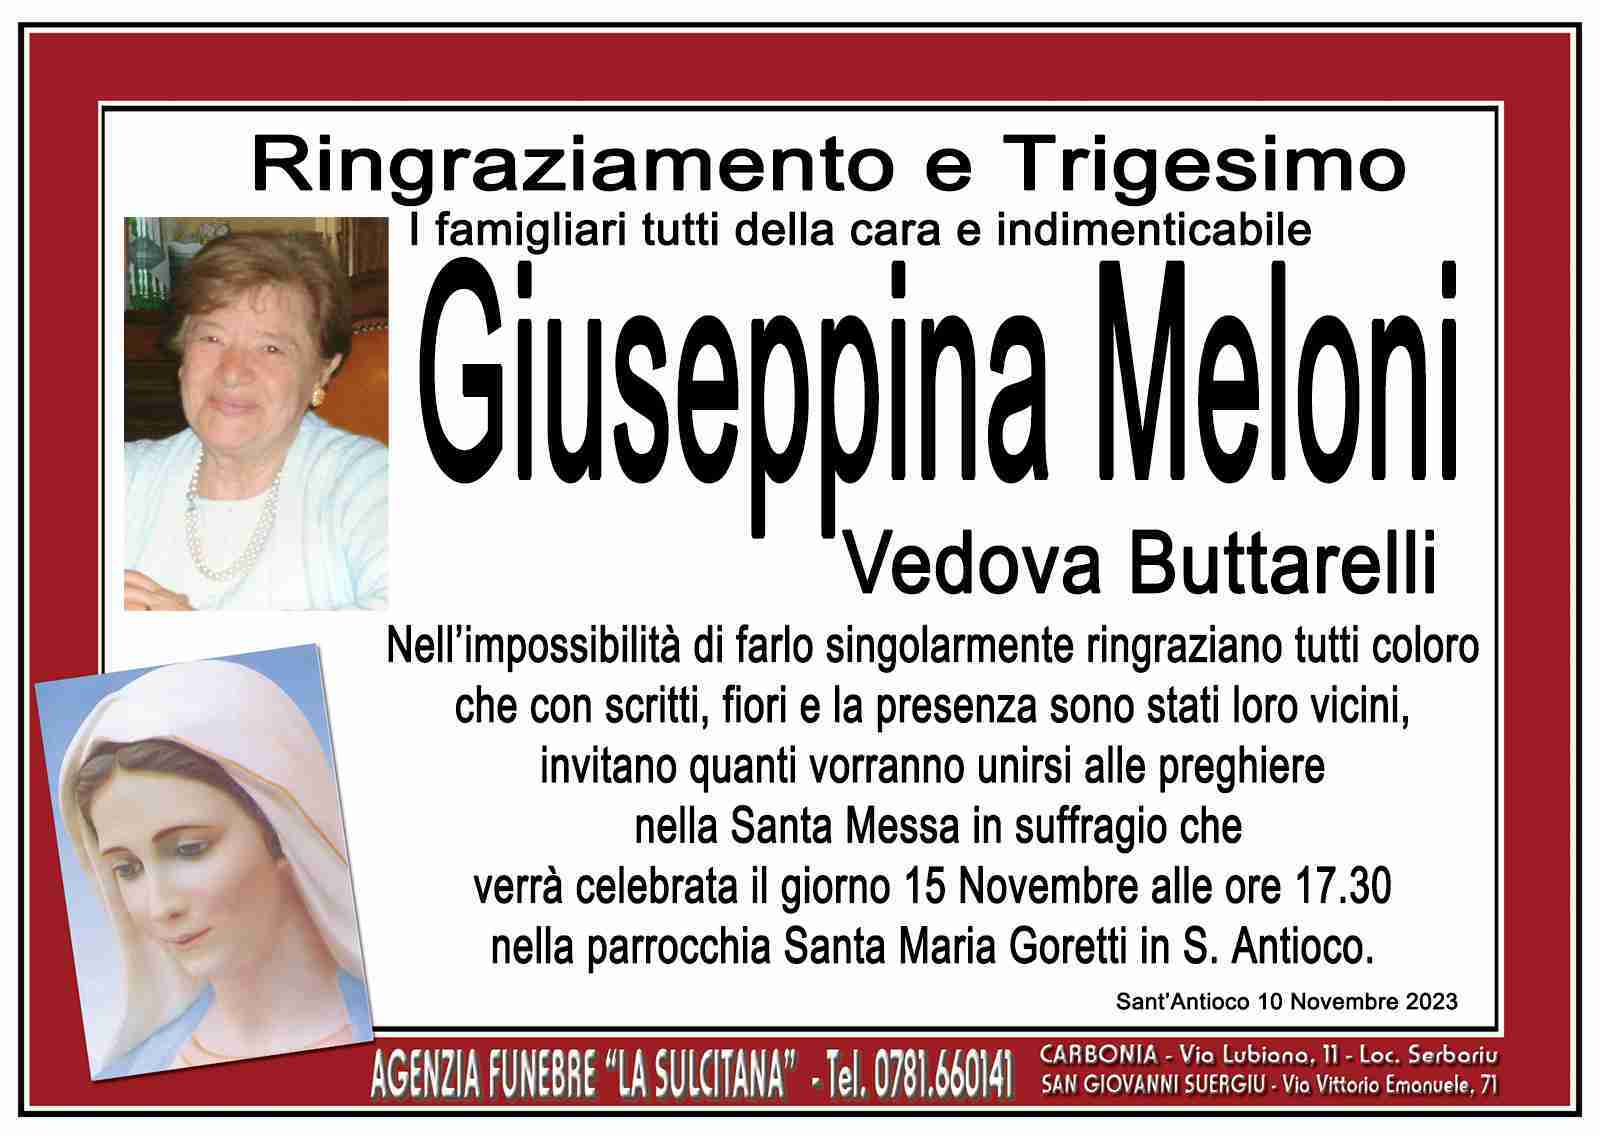 Giuseppina Meloni